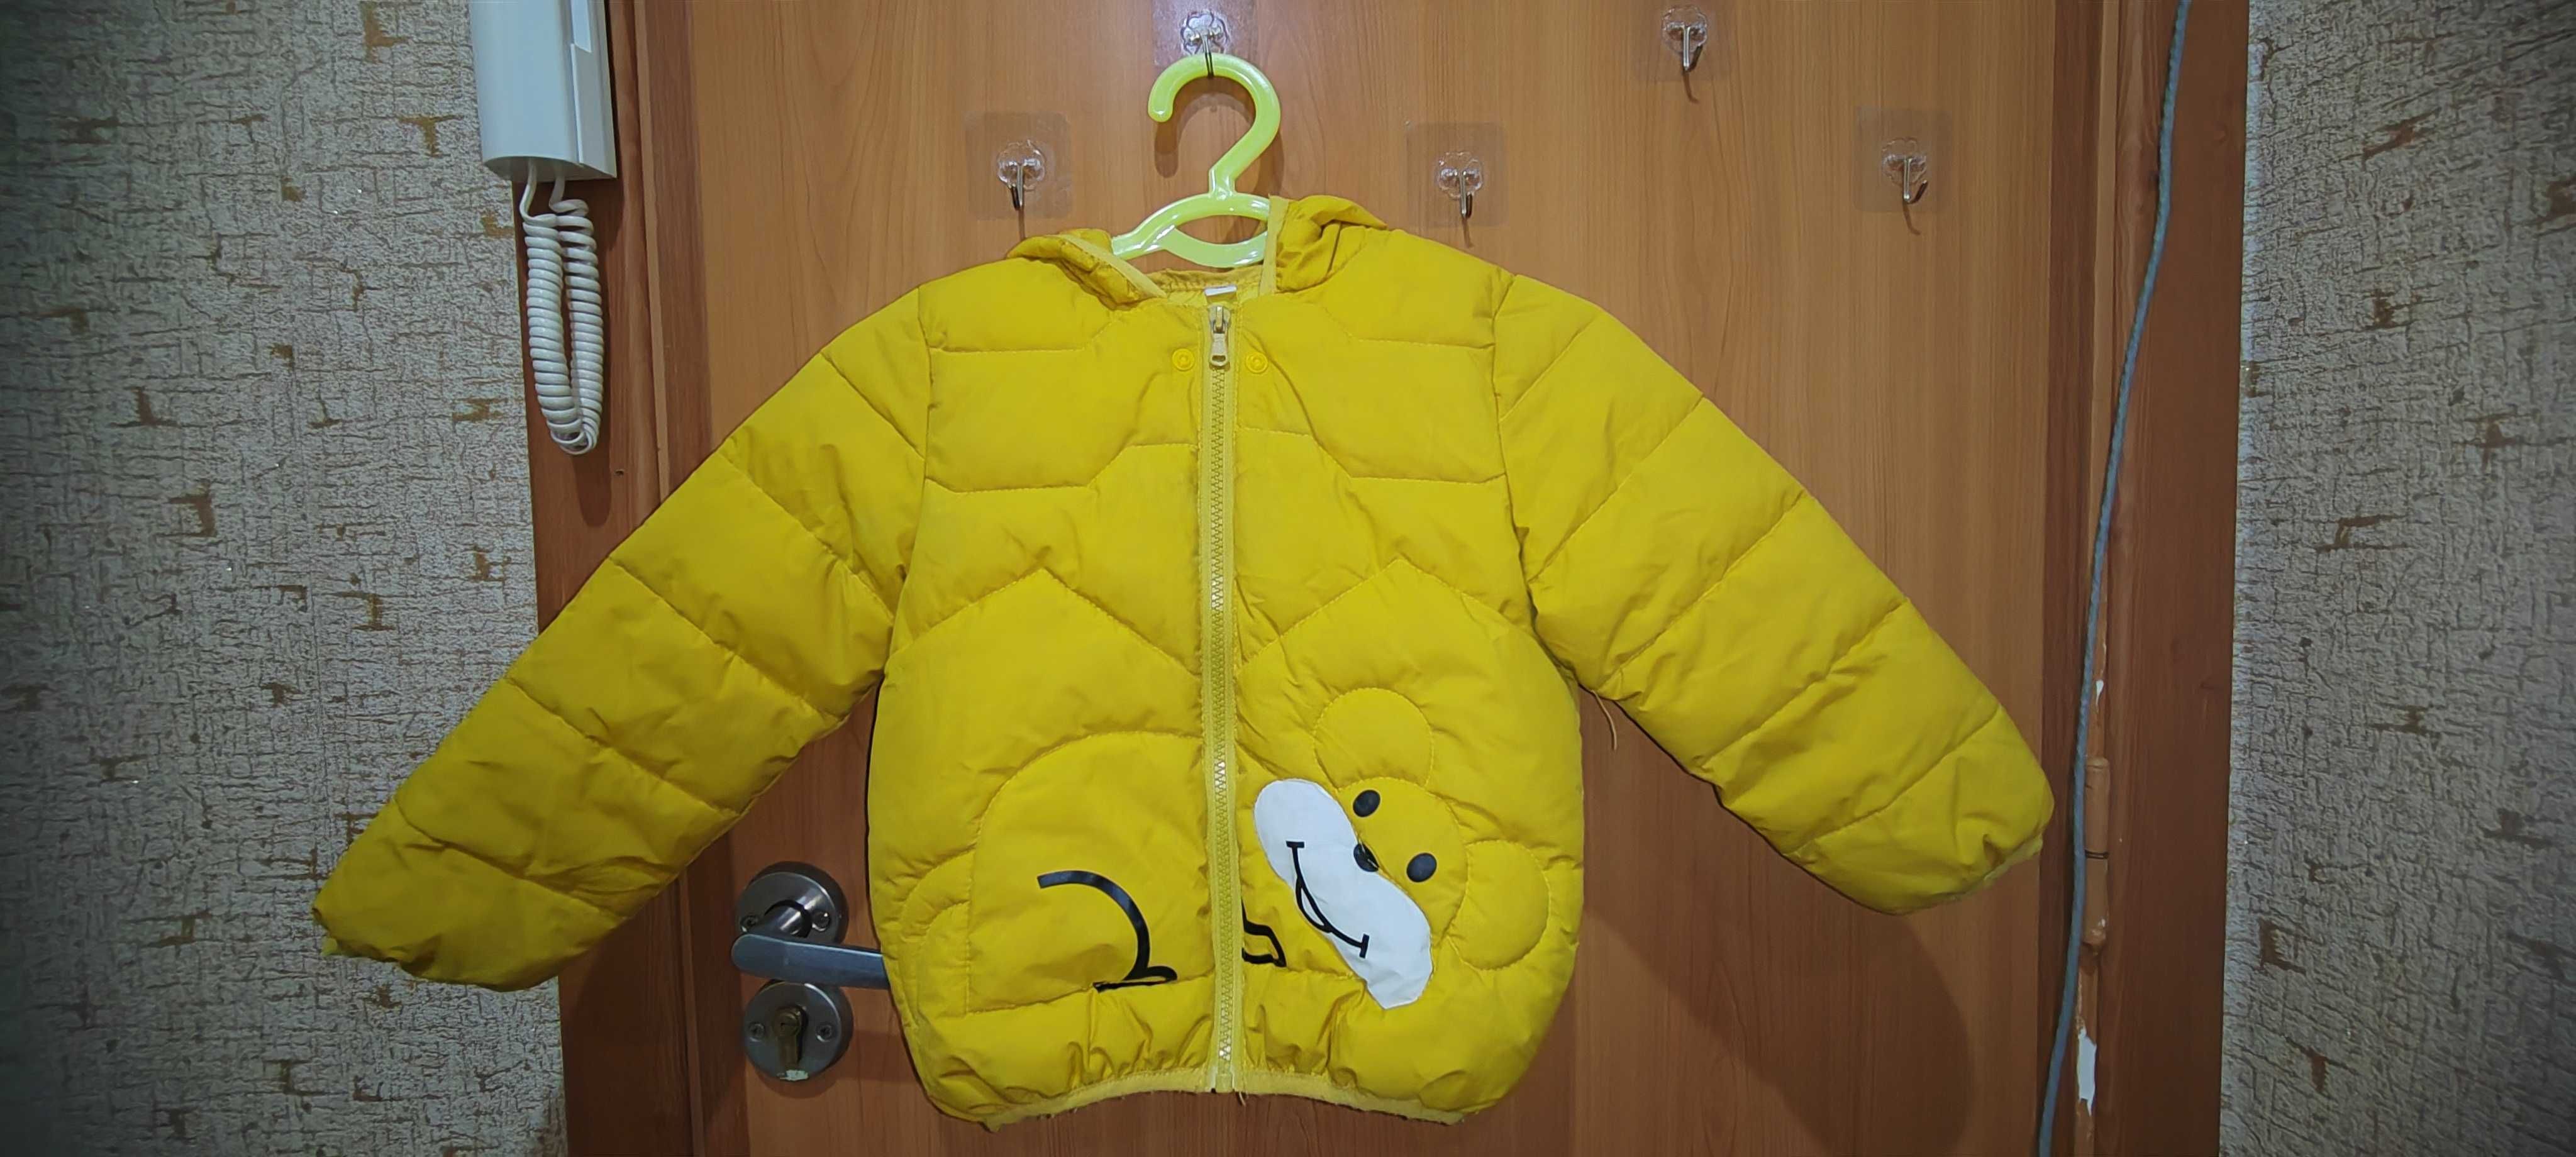 Курточка детская желтая, размер 110.